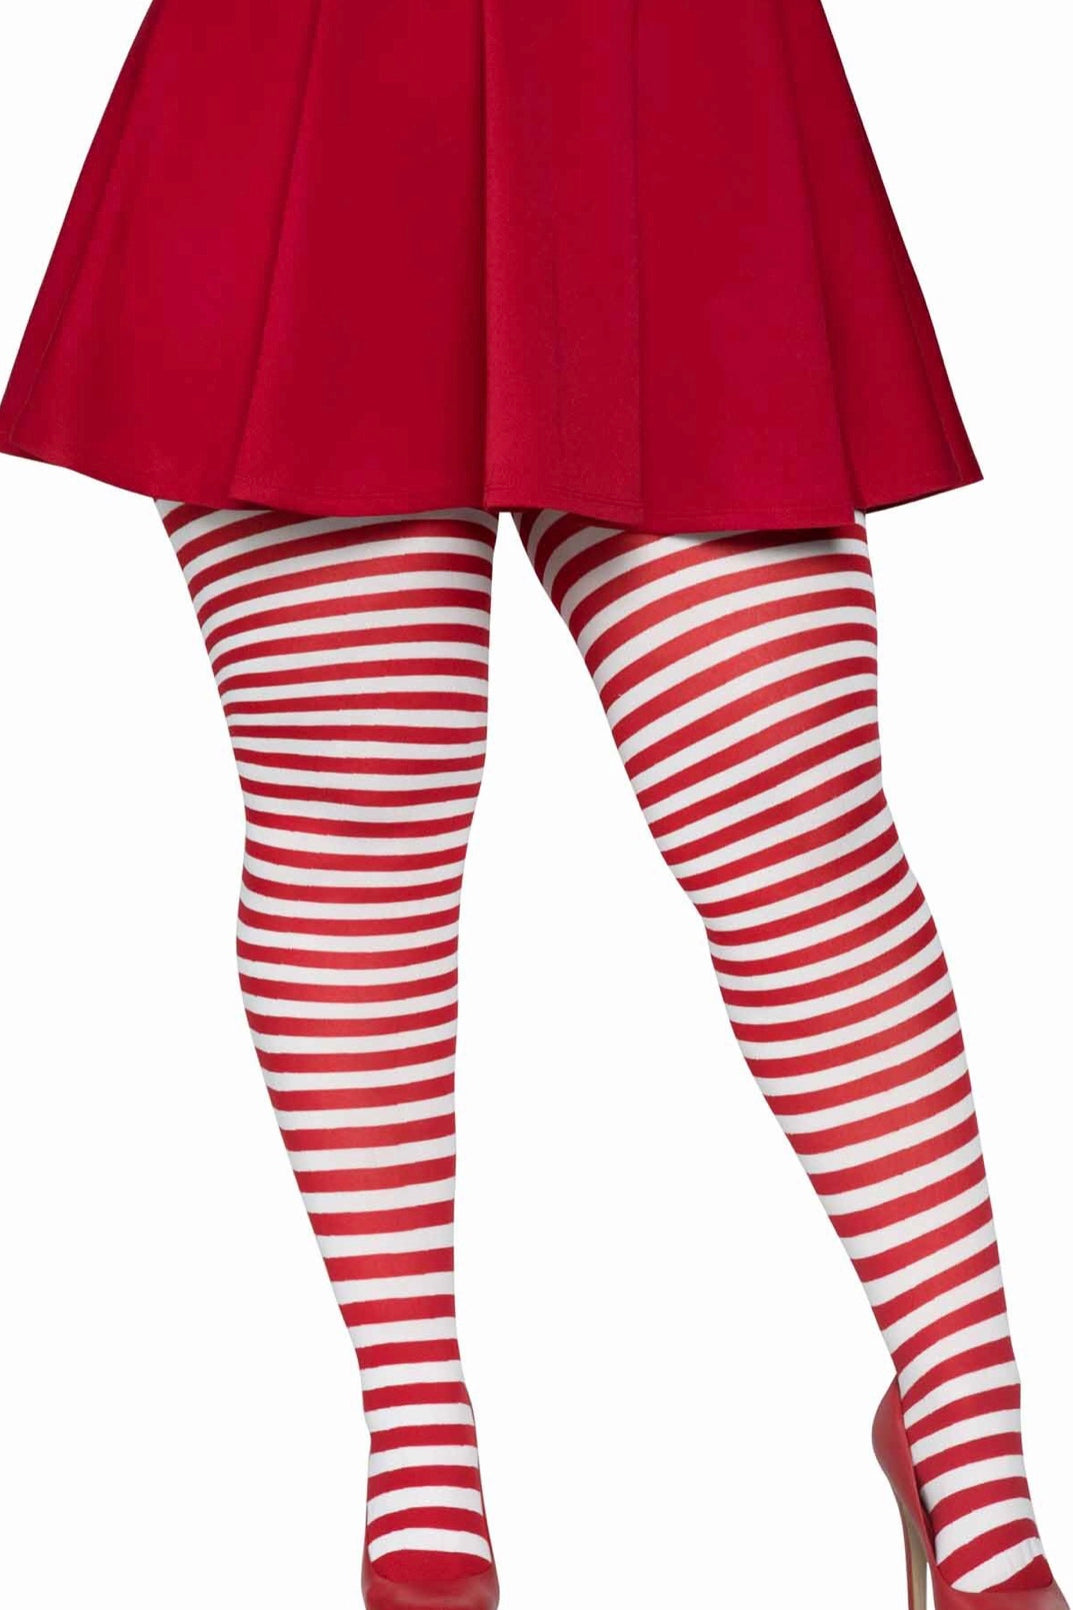 Striped tights white/red - CurvynBeautiful 